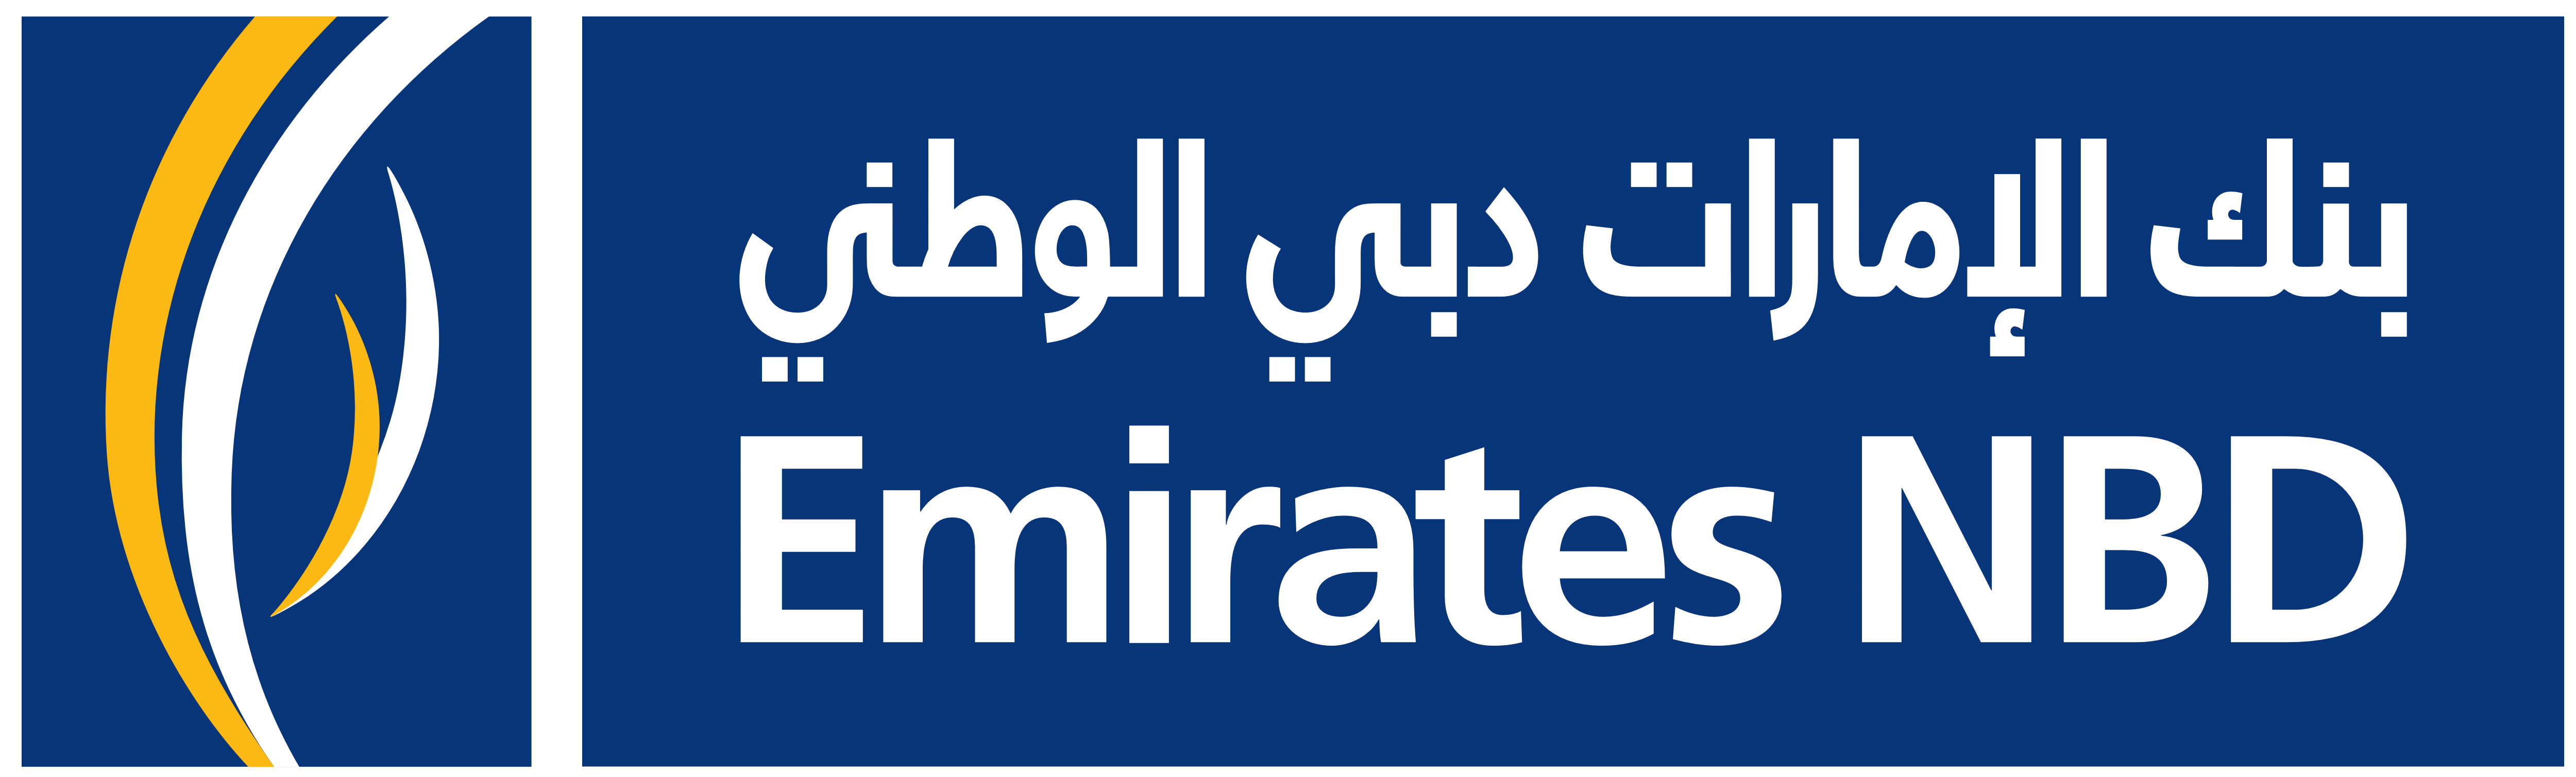 Emirates_NBD_logo_arabic